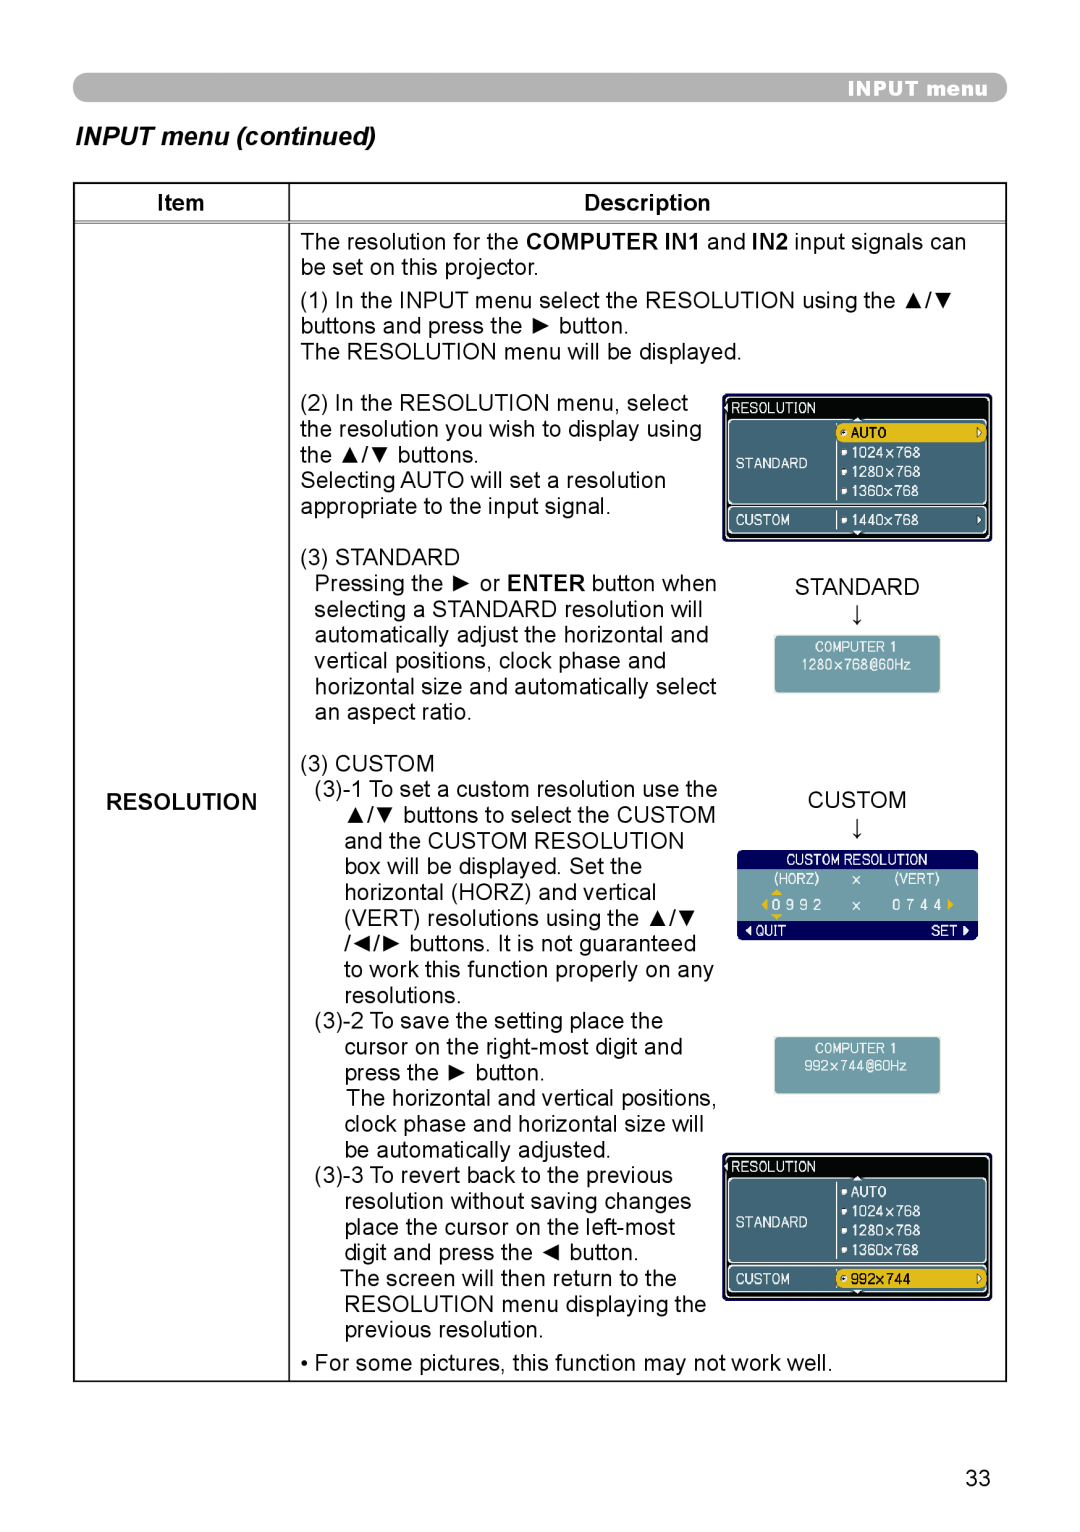 Hitachi CP-X306, CP-X206 user manual INPUT menu continued, Description, The RESOLUTION menu will be displayed, Resolution 